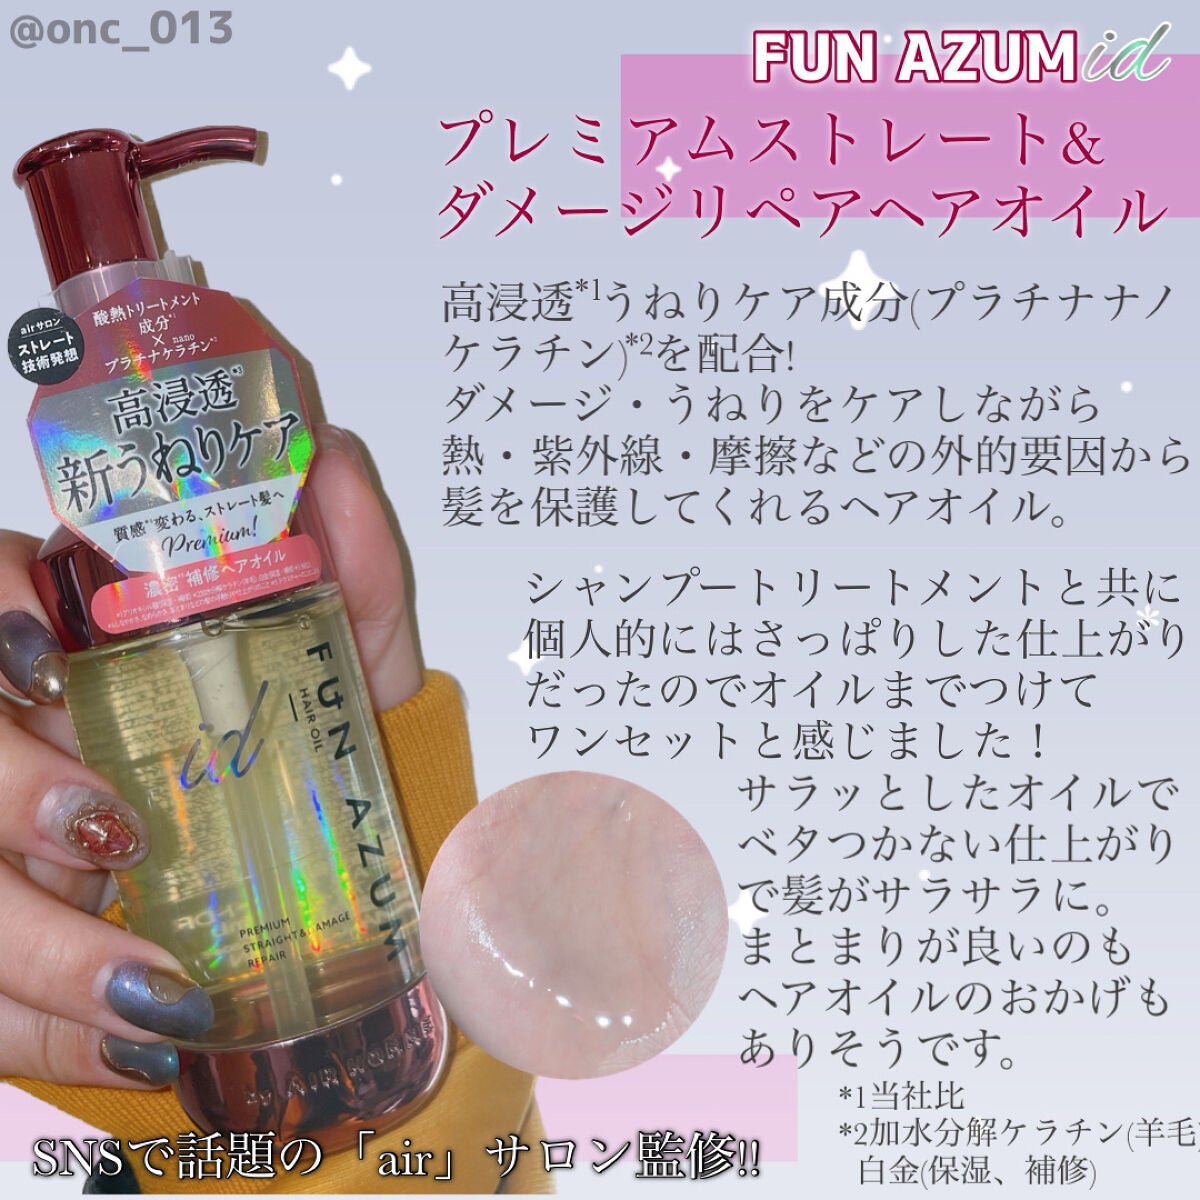 FUN AZUMのヘアケア・スタイリング id プレミアムストレート&ダメージ